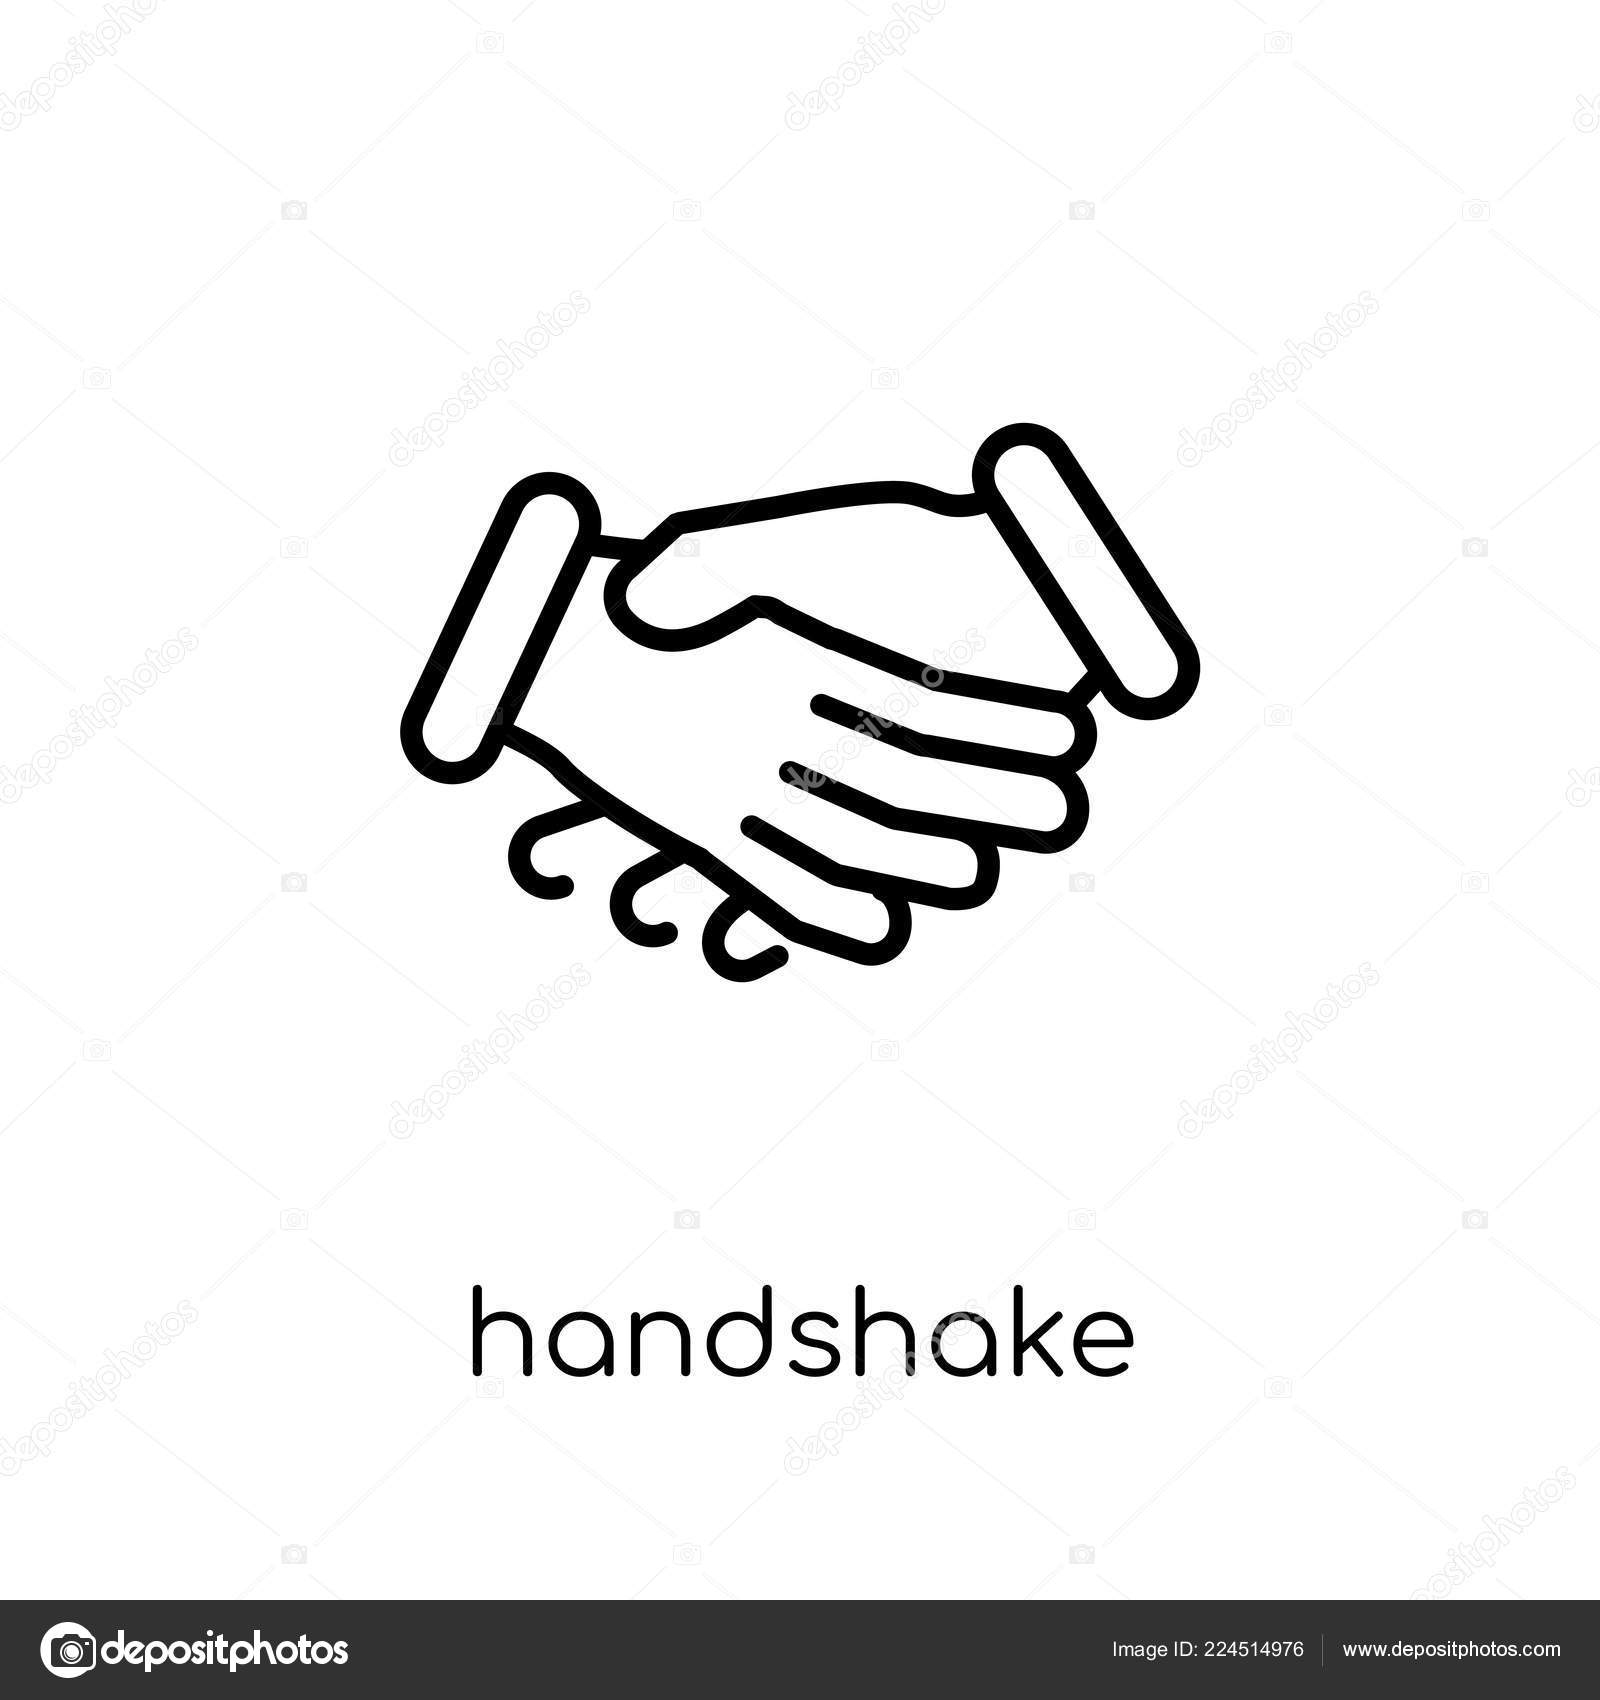 Handshake gesture linear icon. Thin line illustration. Shaking